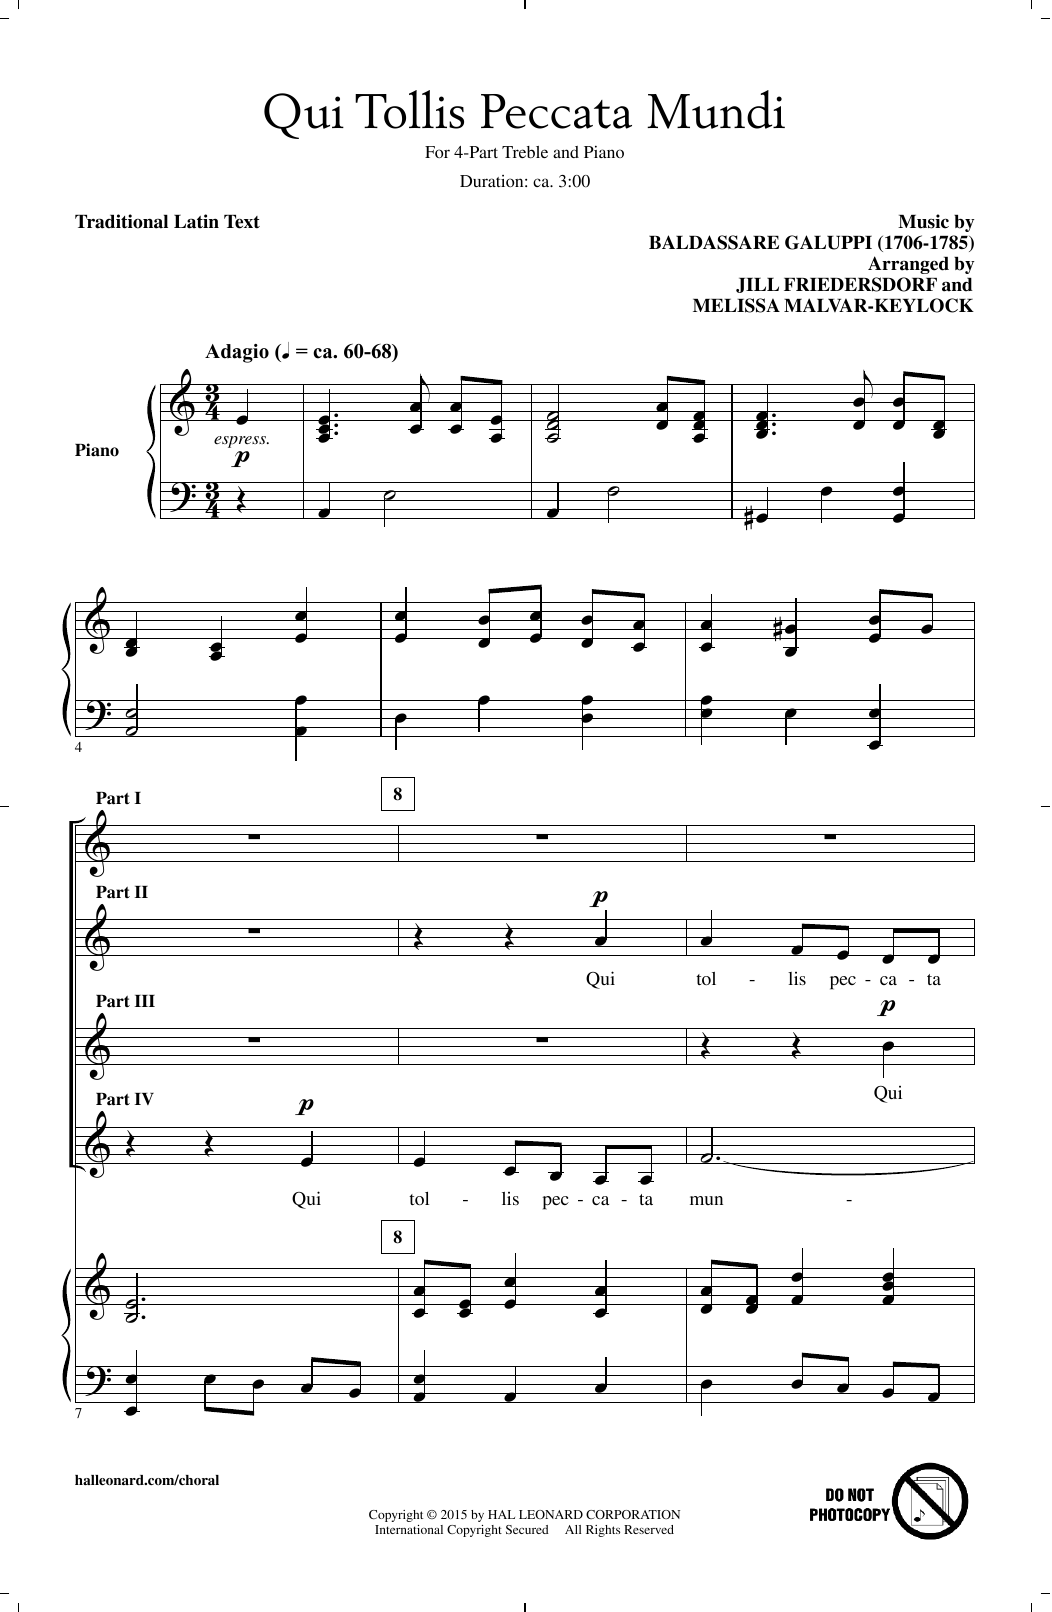 Download Melissa Malvar-Keylock Qui Tollis Peccata Mundi Sheet Music and learn how to play 4-Part PDF digital score in minutes